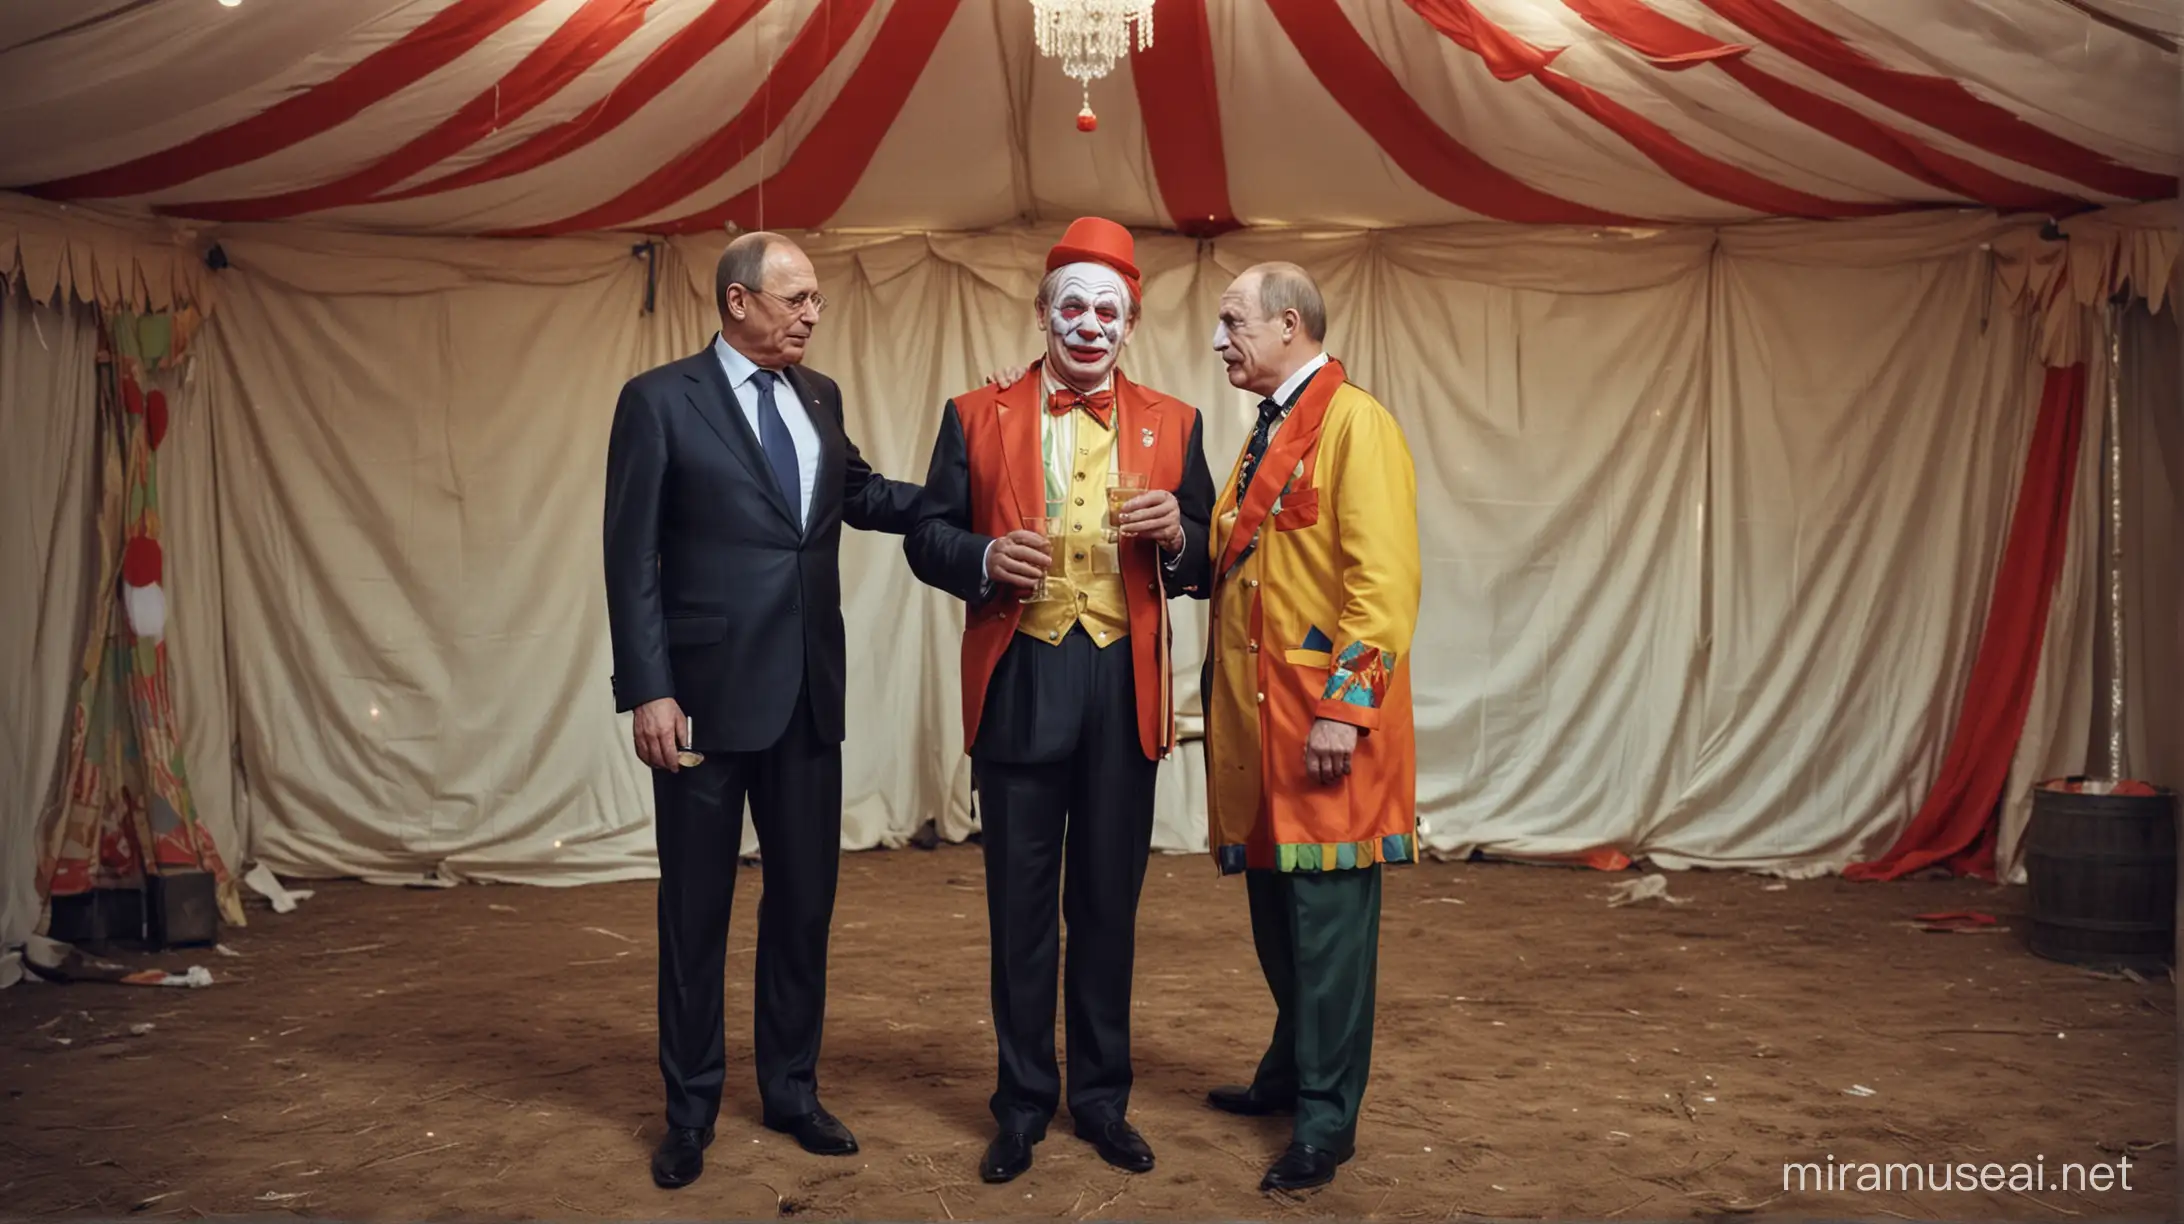 Sad Lavrov and Vladimir Putin Clowning in Circus Tent